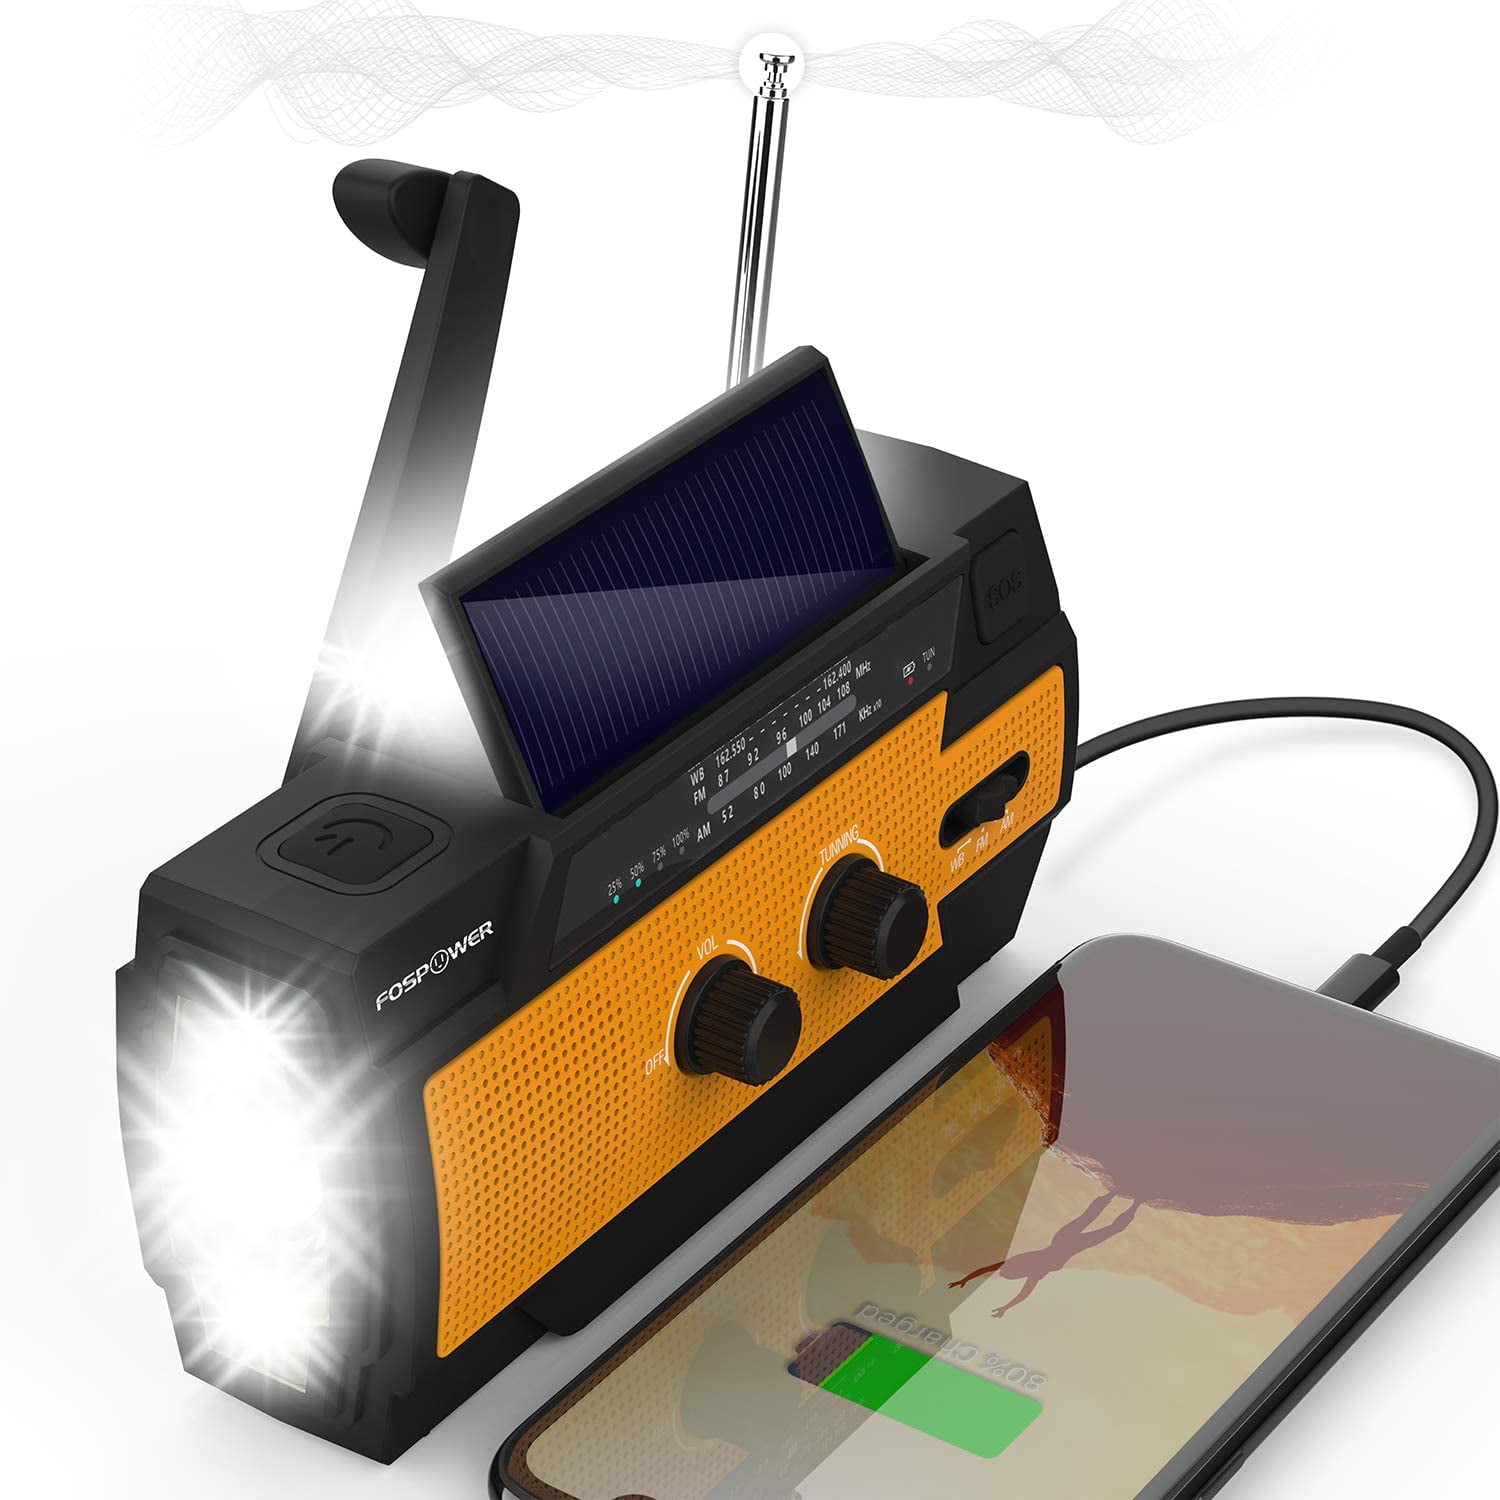 Emergency Solar Hand Crank AM/FM/WB Radio LED Torch USB Charger Power Bank 2020